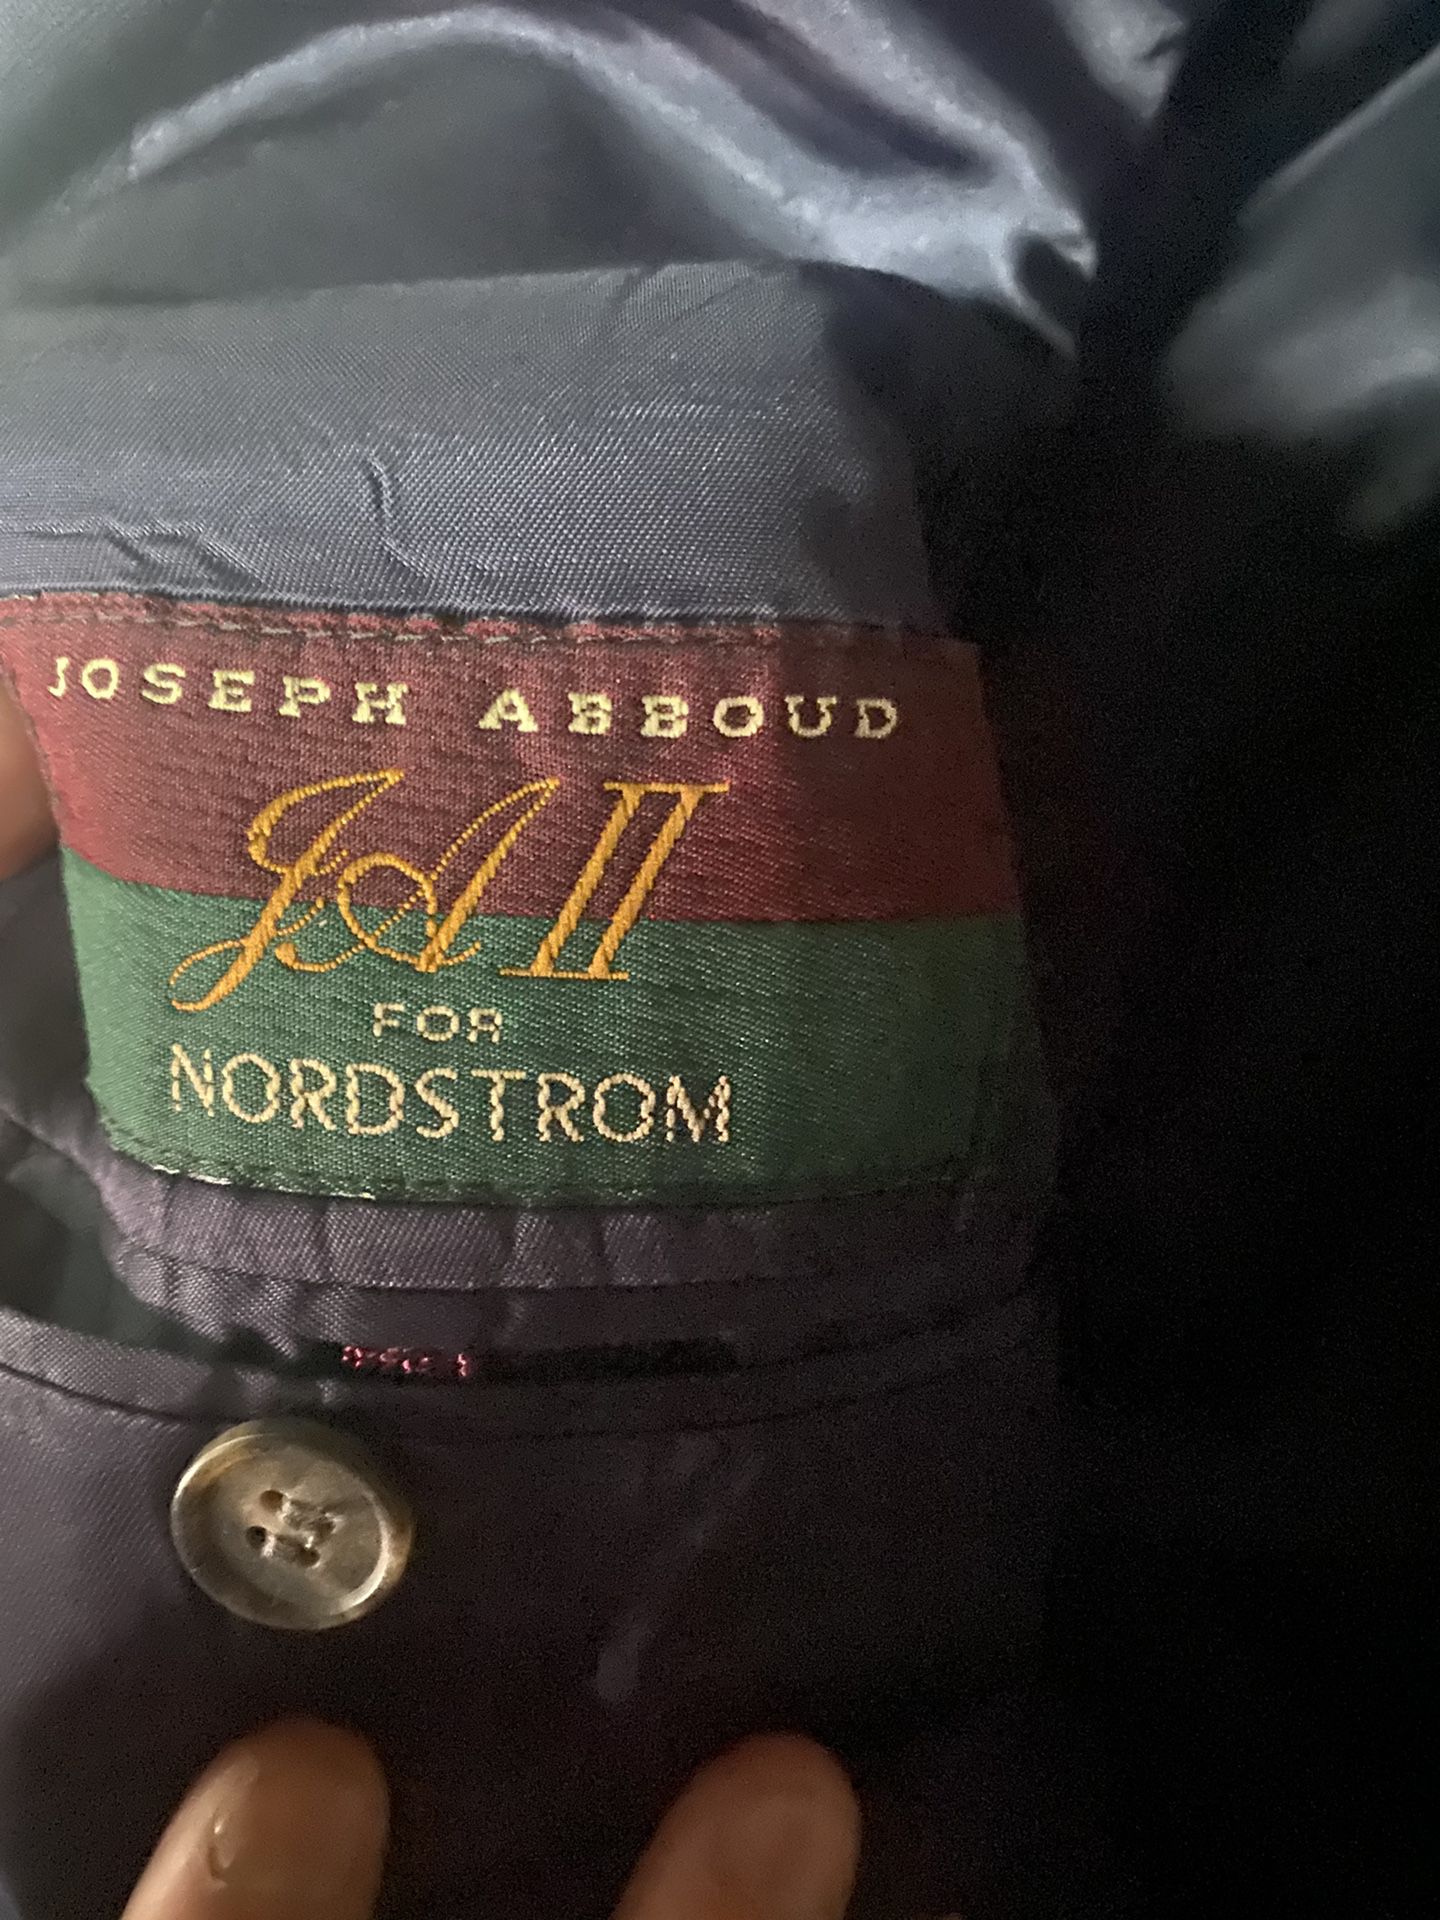 Nordstrom Men’s Size Small Suit Coat